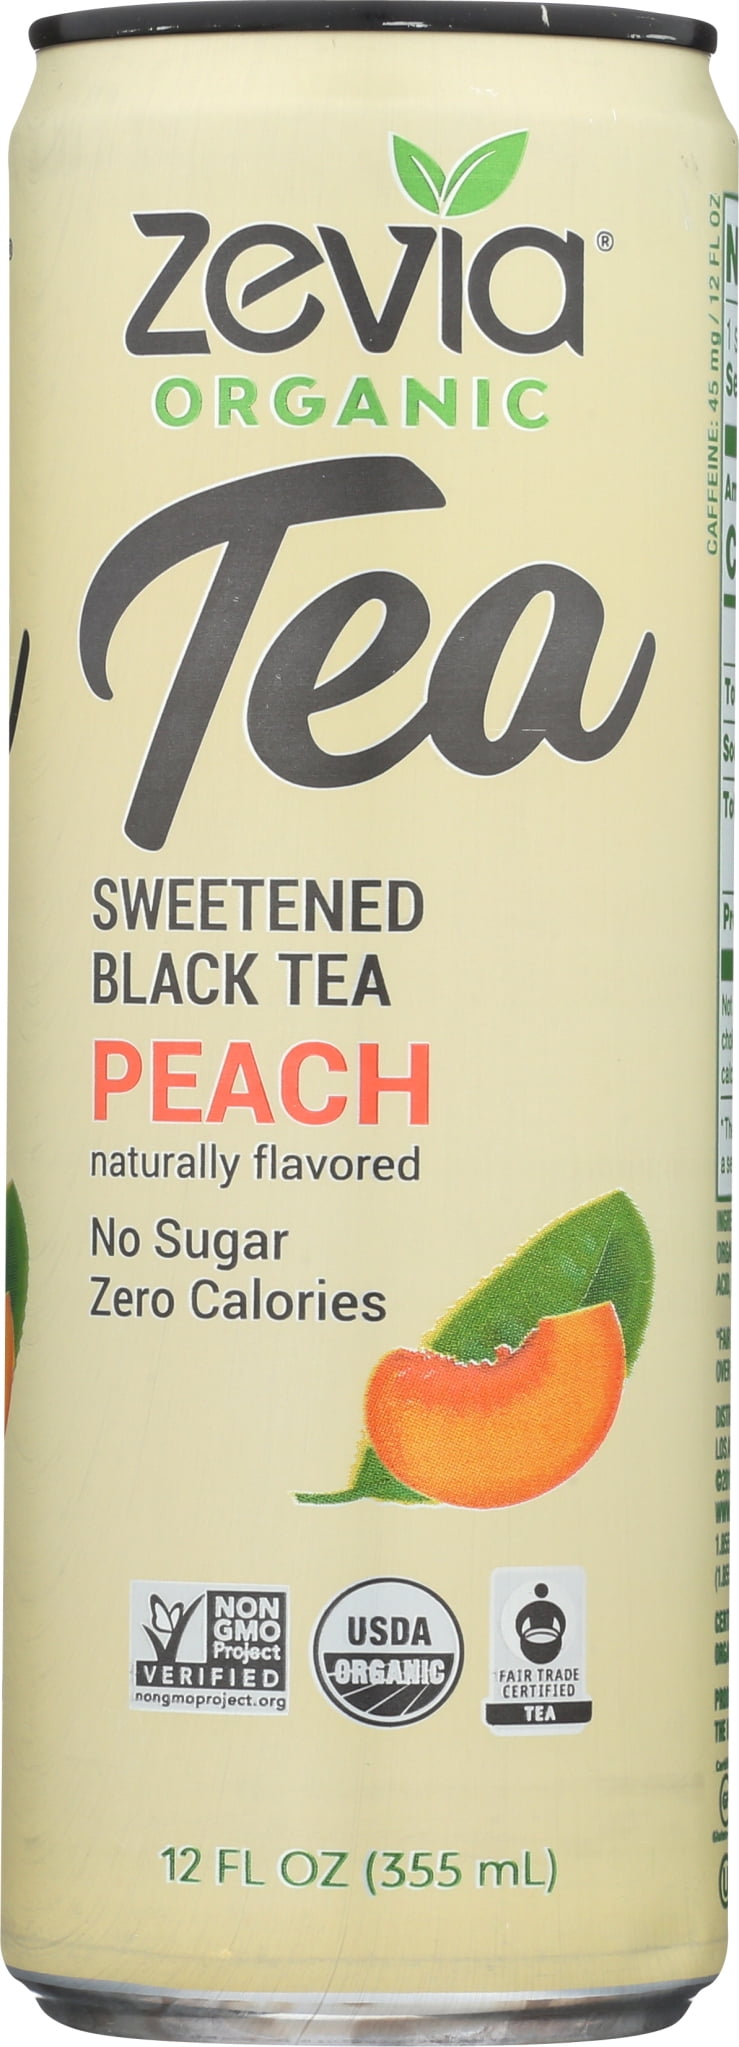 Zevia Organic Sweetened Black Tea Peach 12 Fl Oz Can